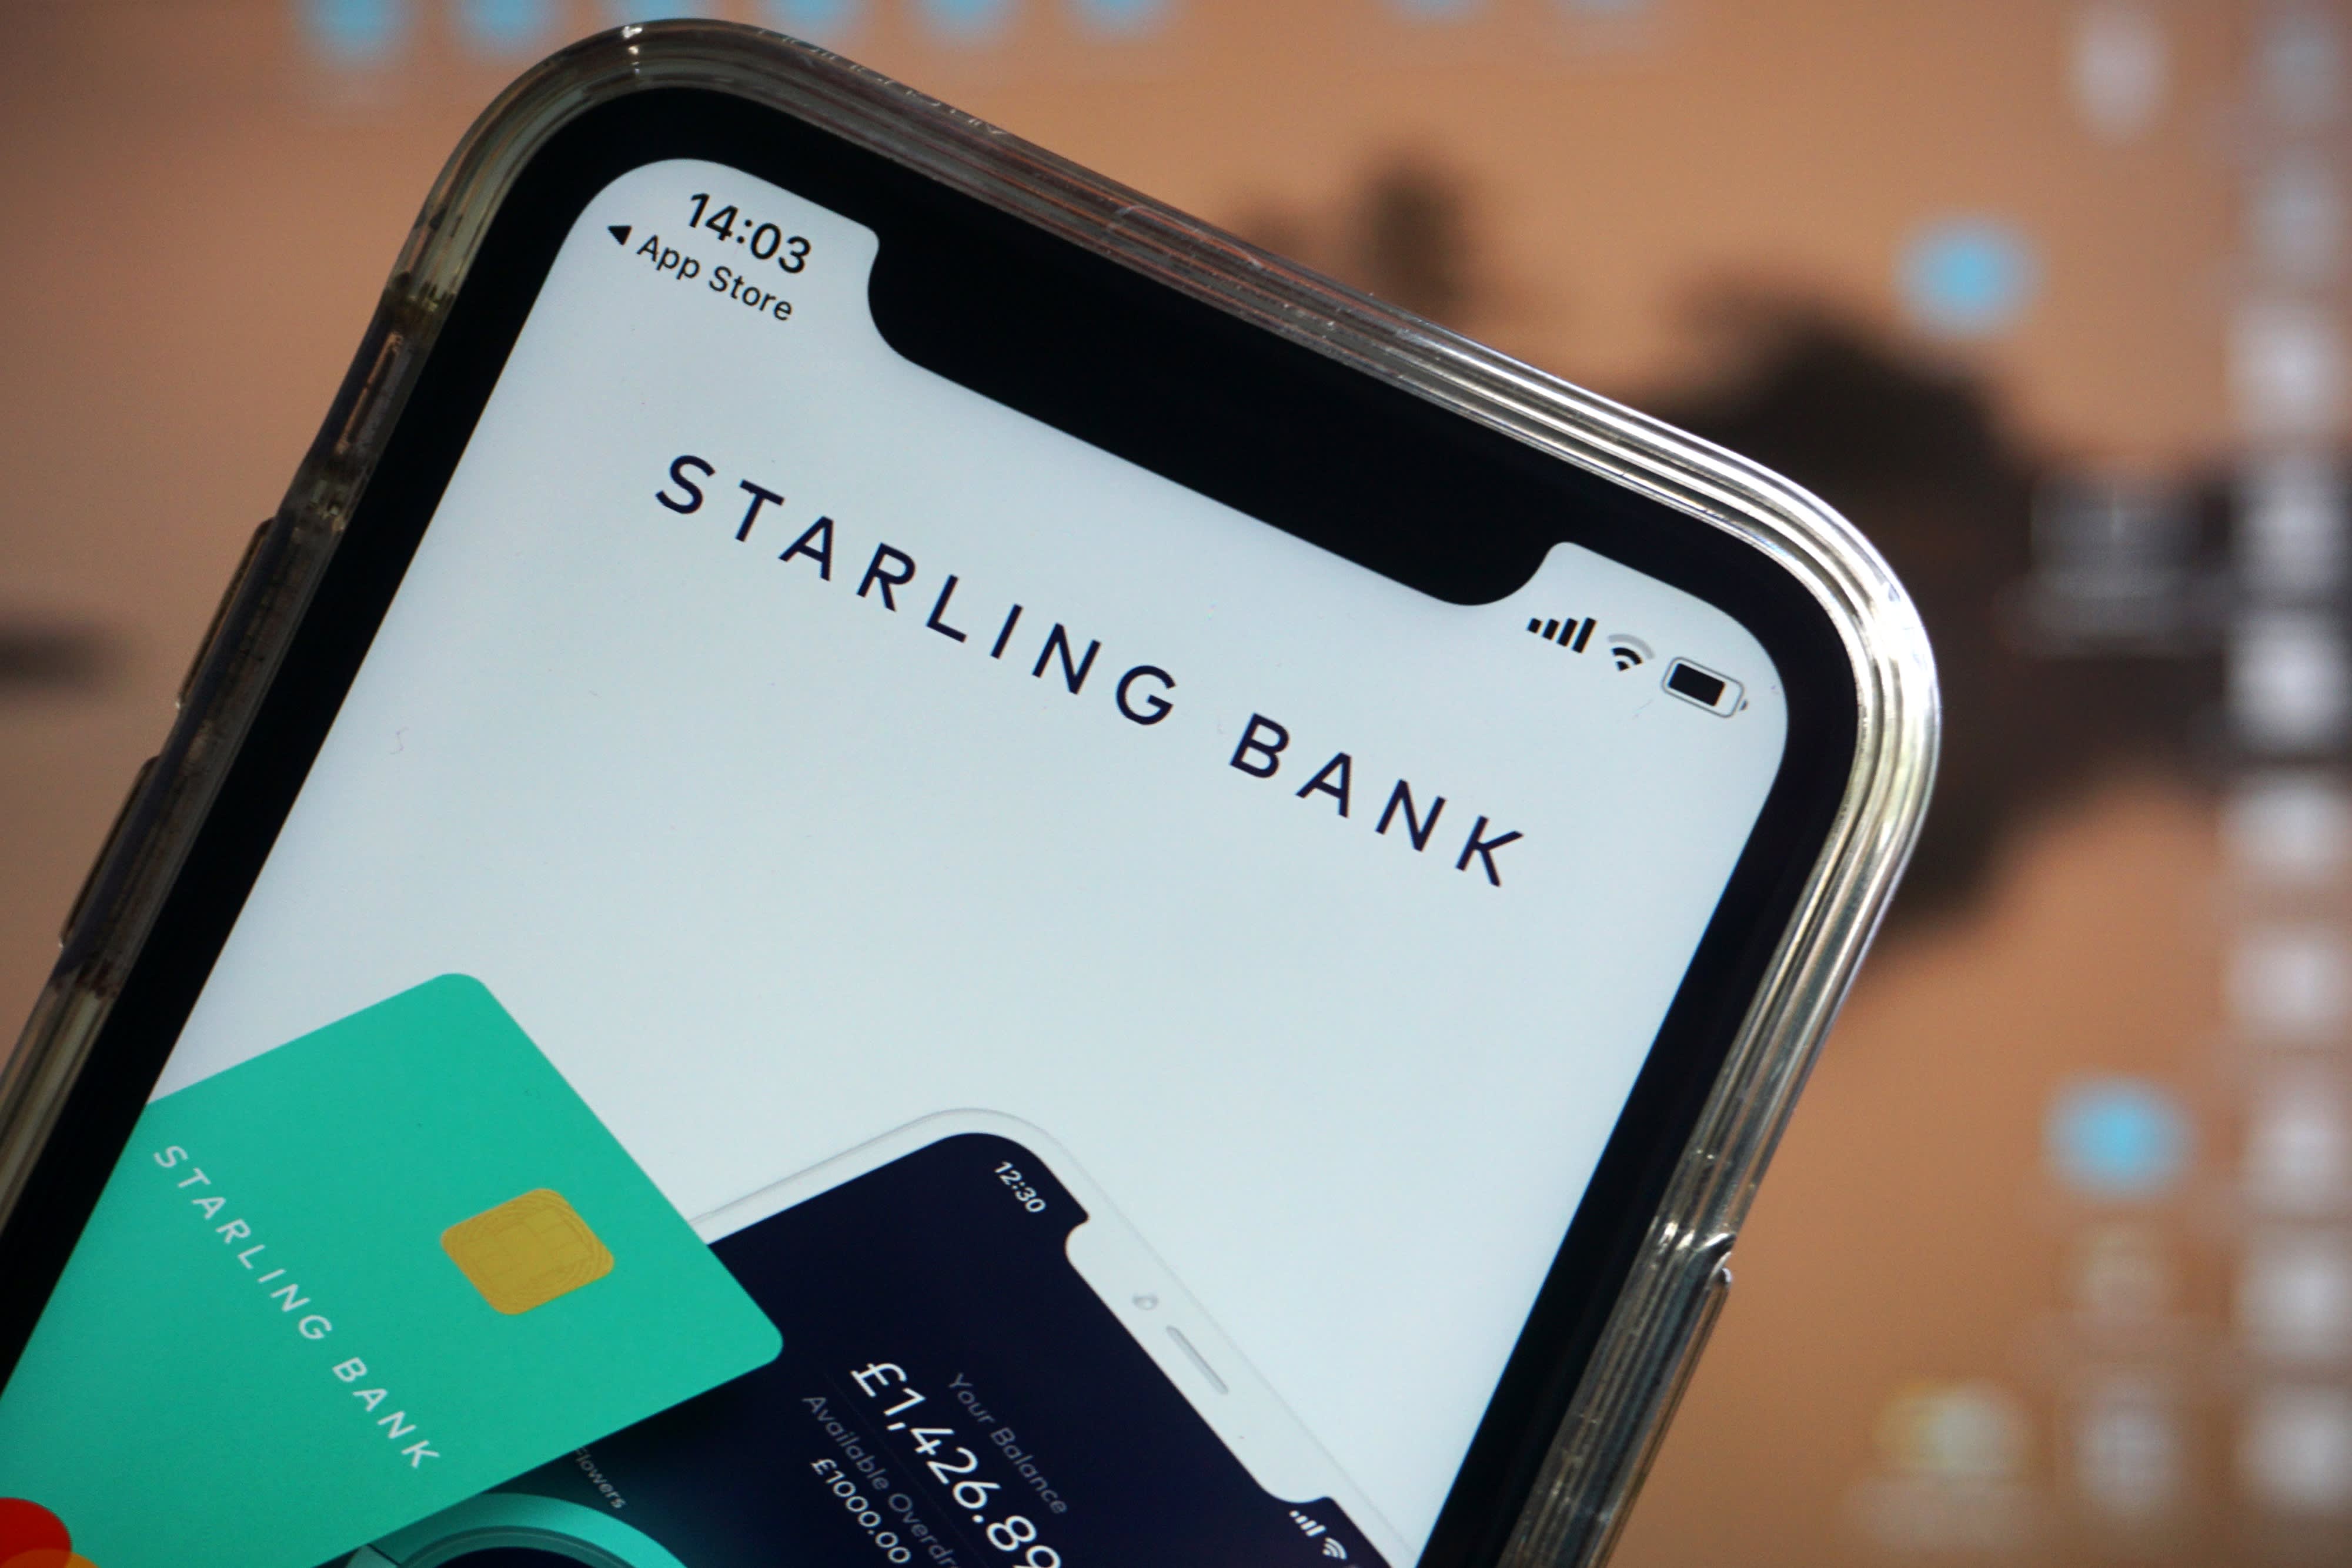 Starling, the UK’s digital bank valued at $ 1.5 billion, after Fidelity’s support